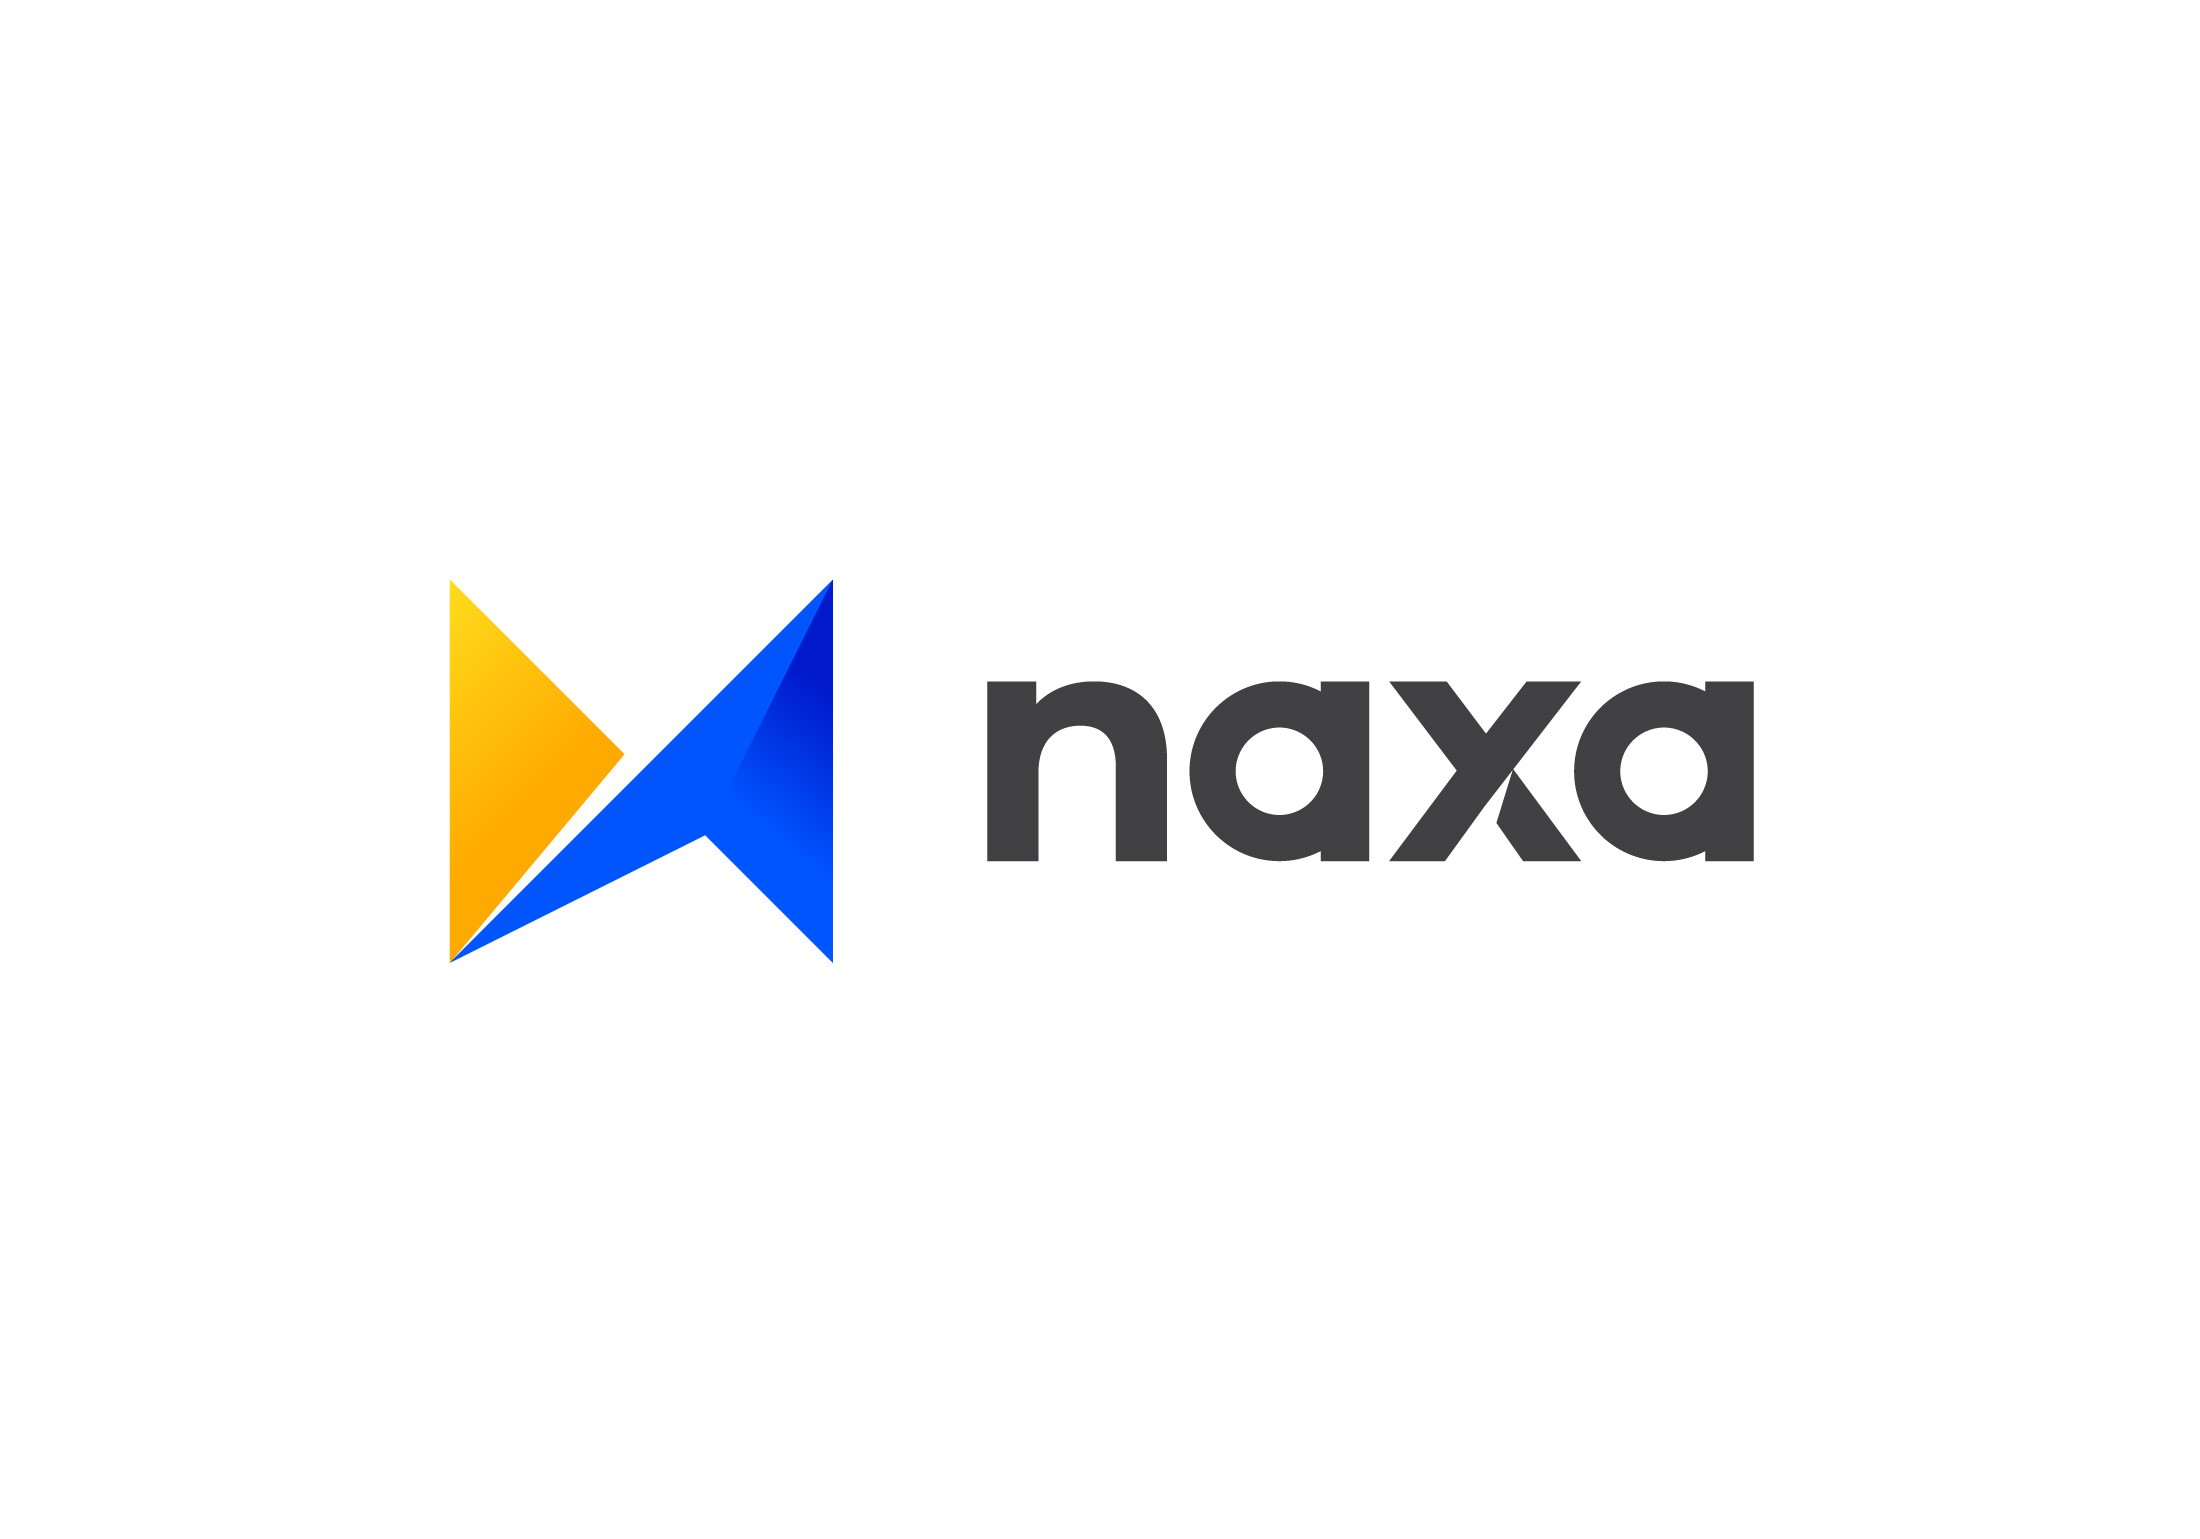 Naxa_logo%20%283%29.jpg